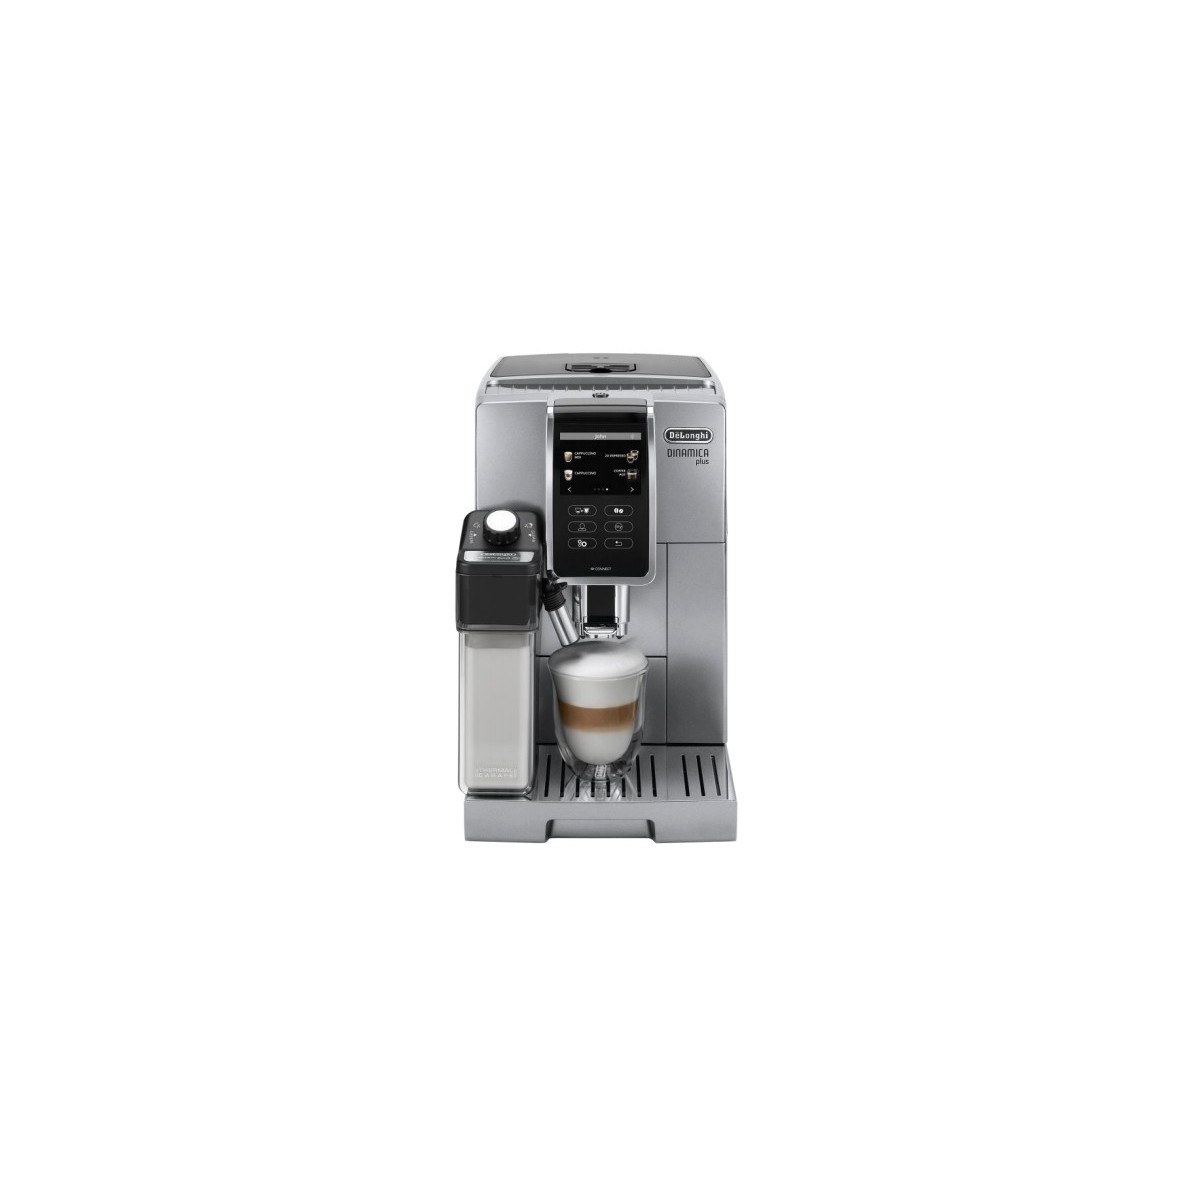 De Longhi Ecam 370.95.S - Combi coffee maker - Coffee beans - Built-in grinder - 1450 W - Silver